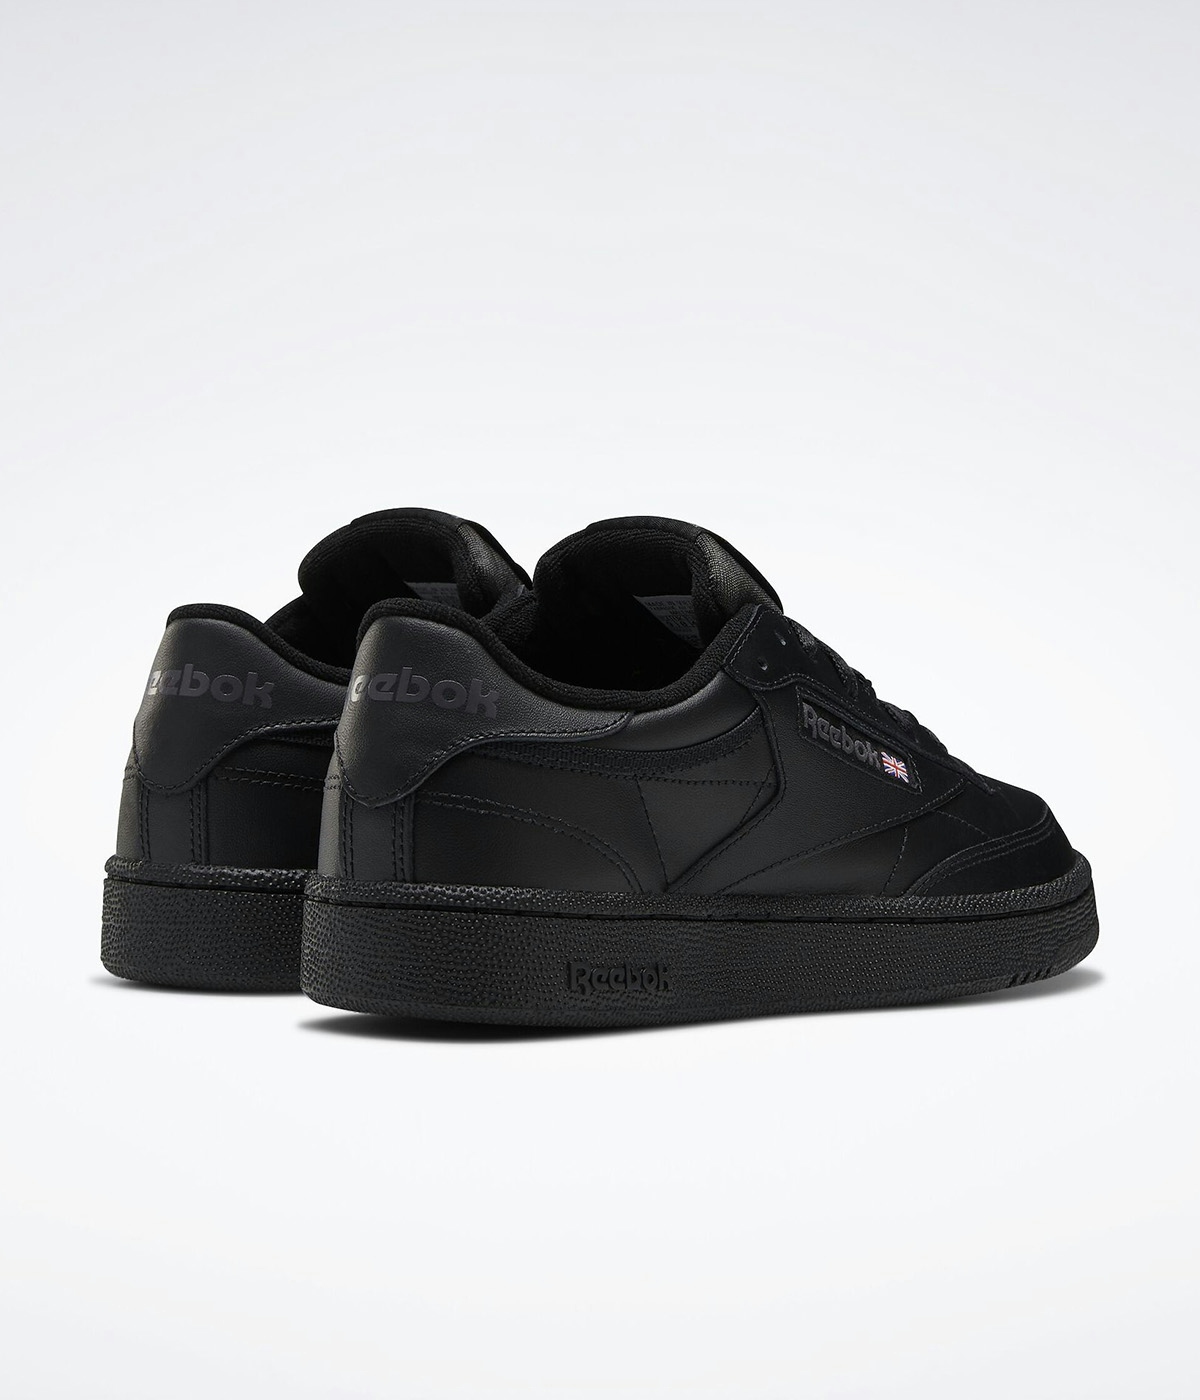 Reebok Club C 85 Shoes Black/Charcoal 2